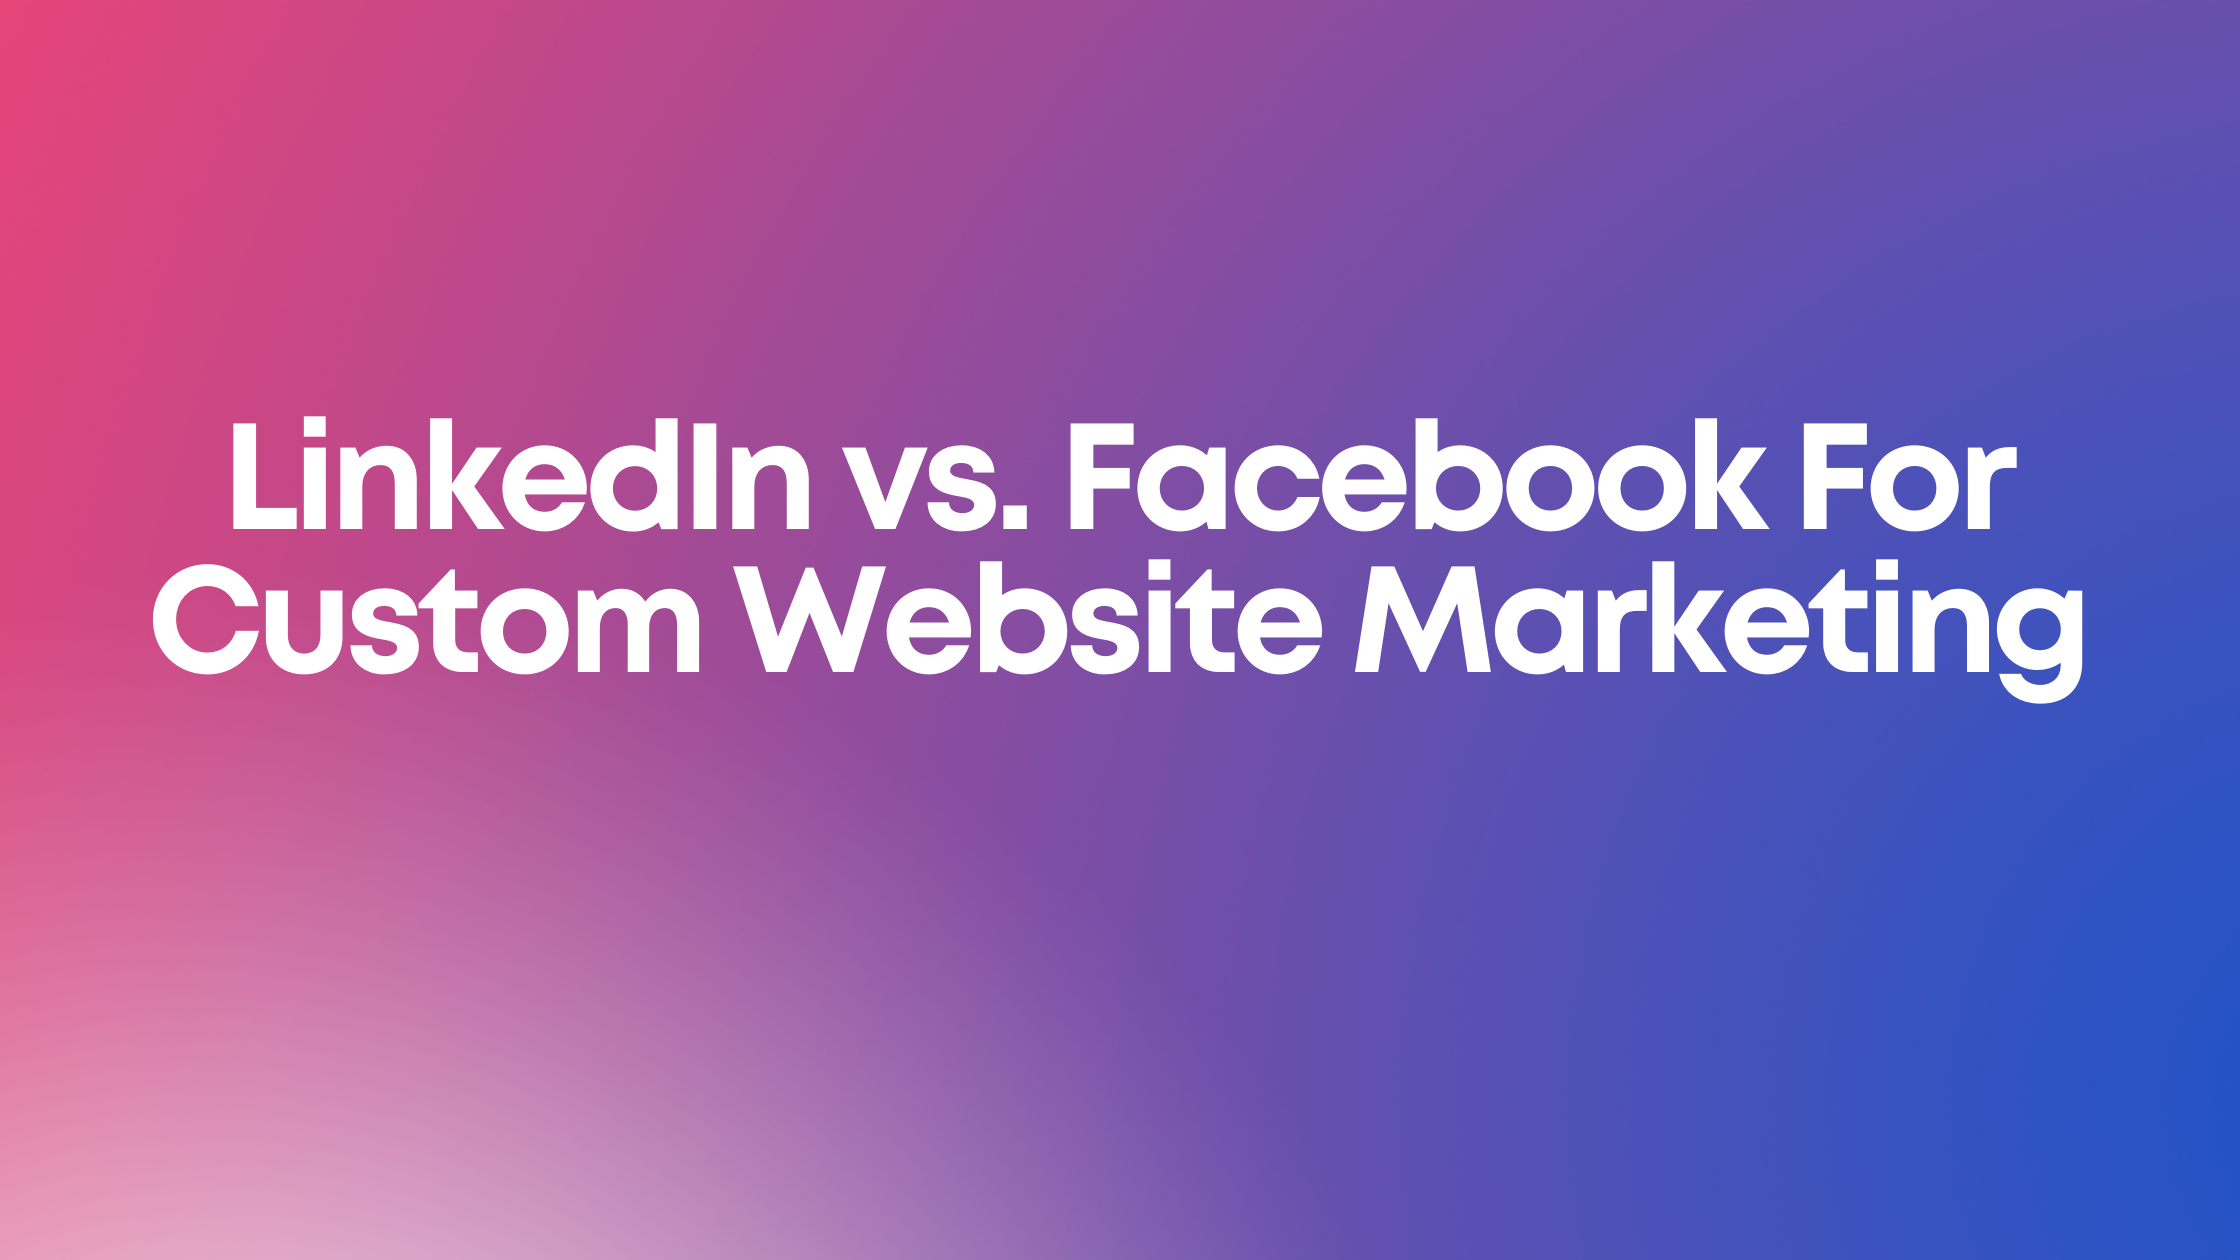 LinkedIn vs. Facebook For Custom Website Marketing